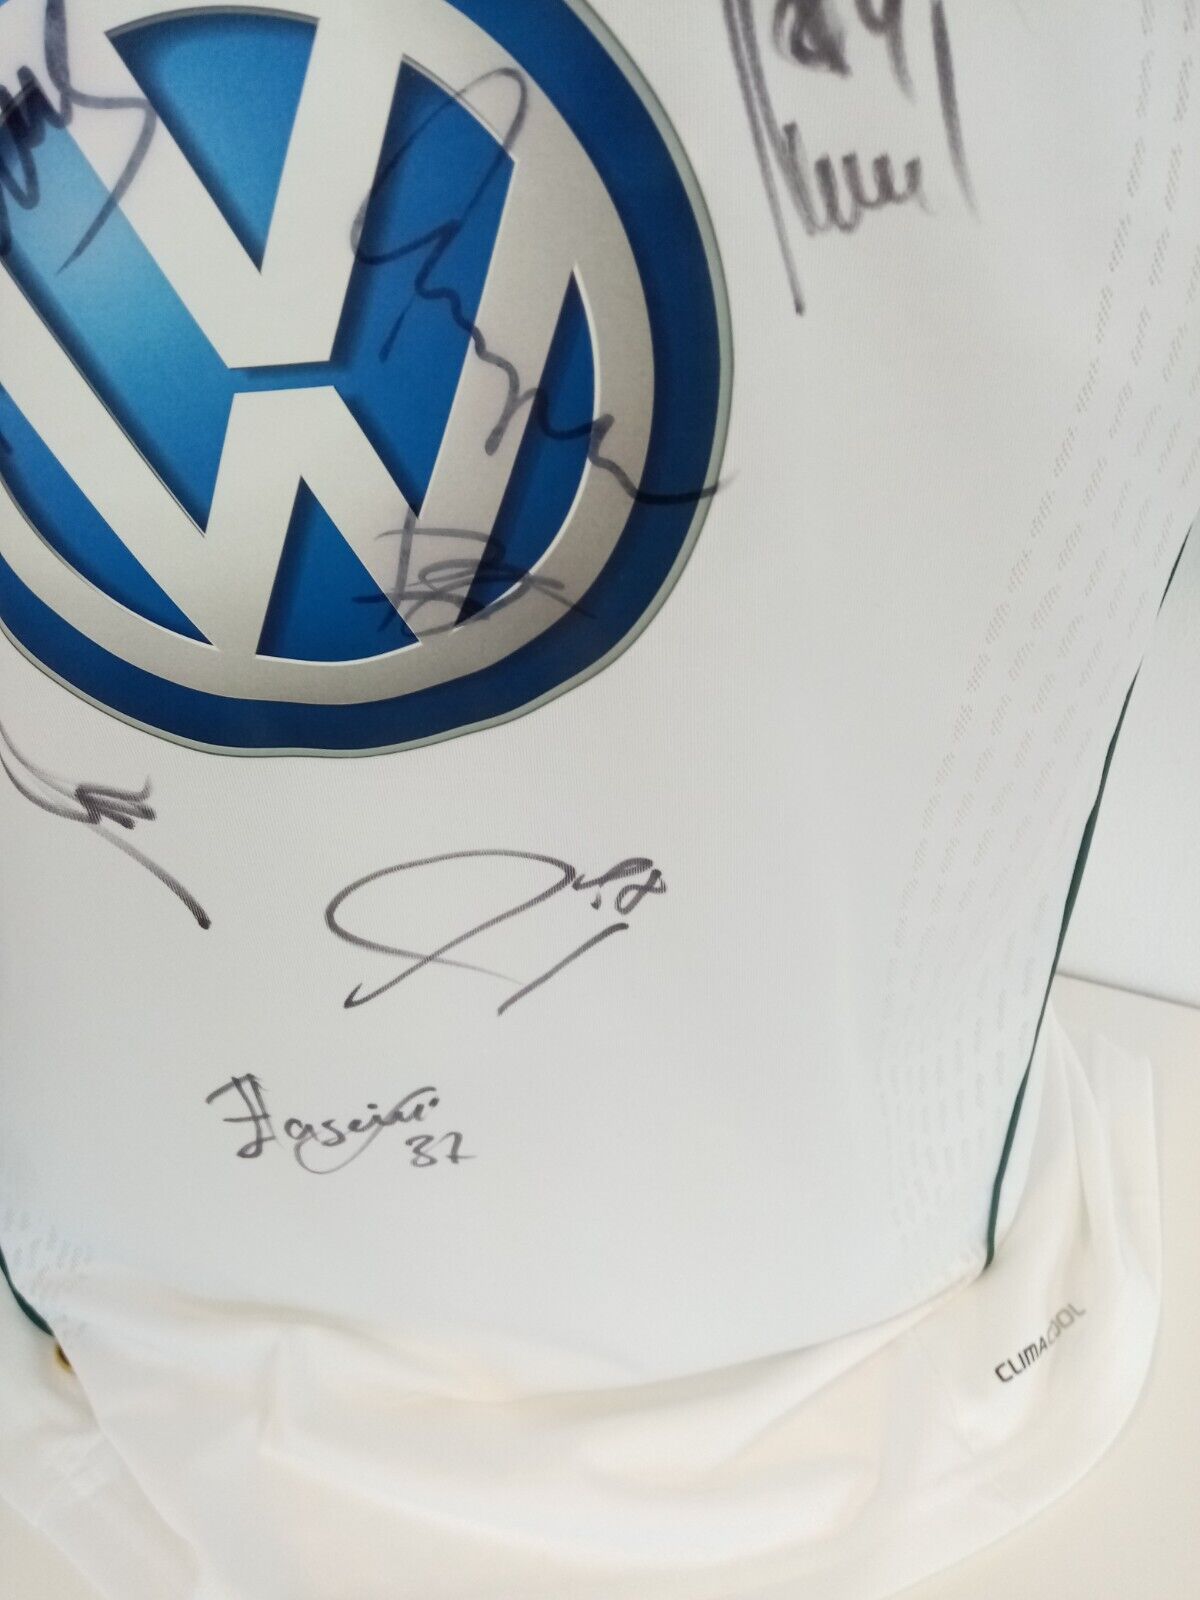 VFL Wolfsburg Trikot 10/11 Teamsigniert Autogramm Fußball Adidas Bundesliga M